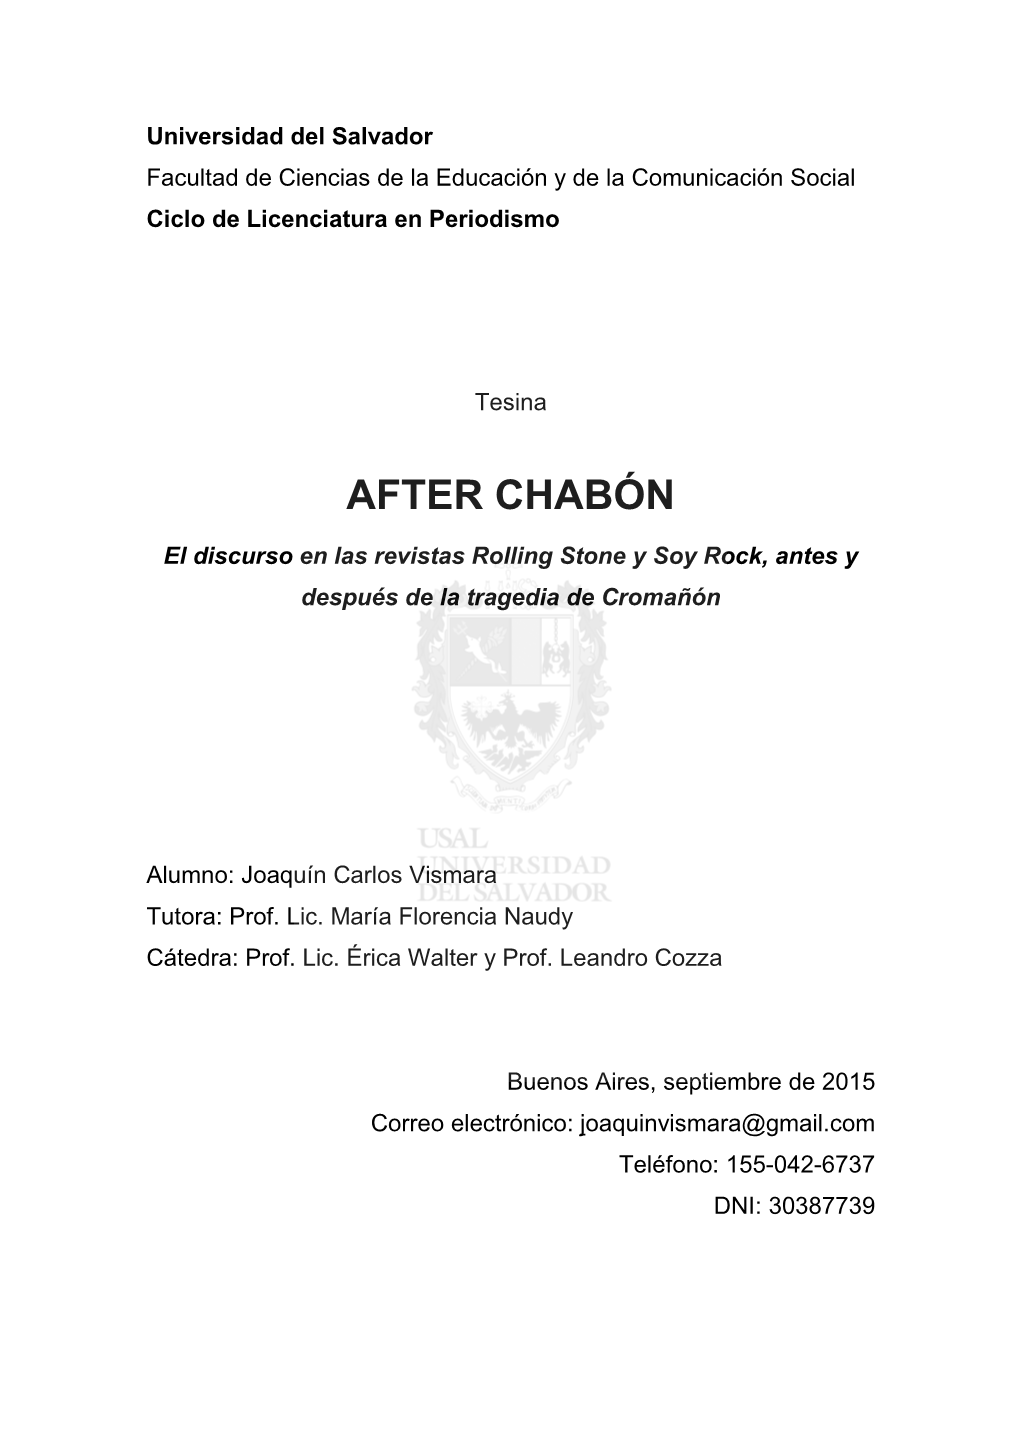 After Chabón